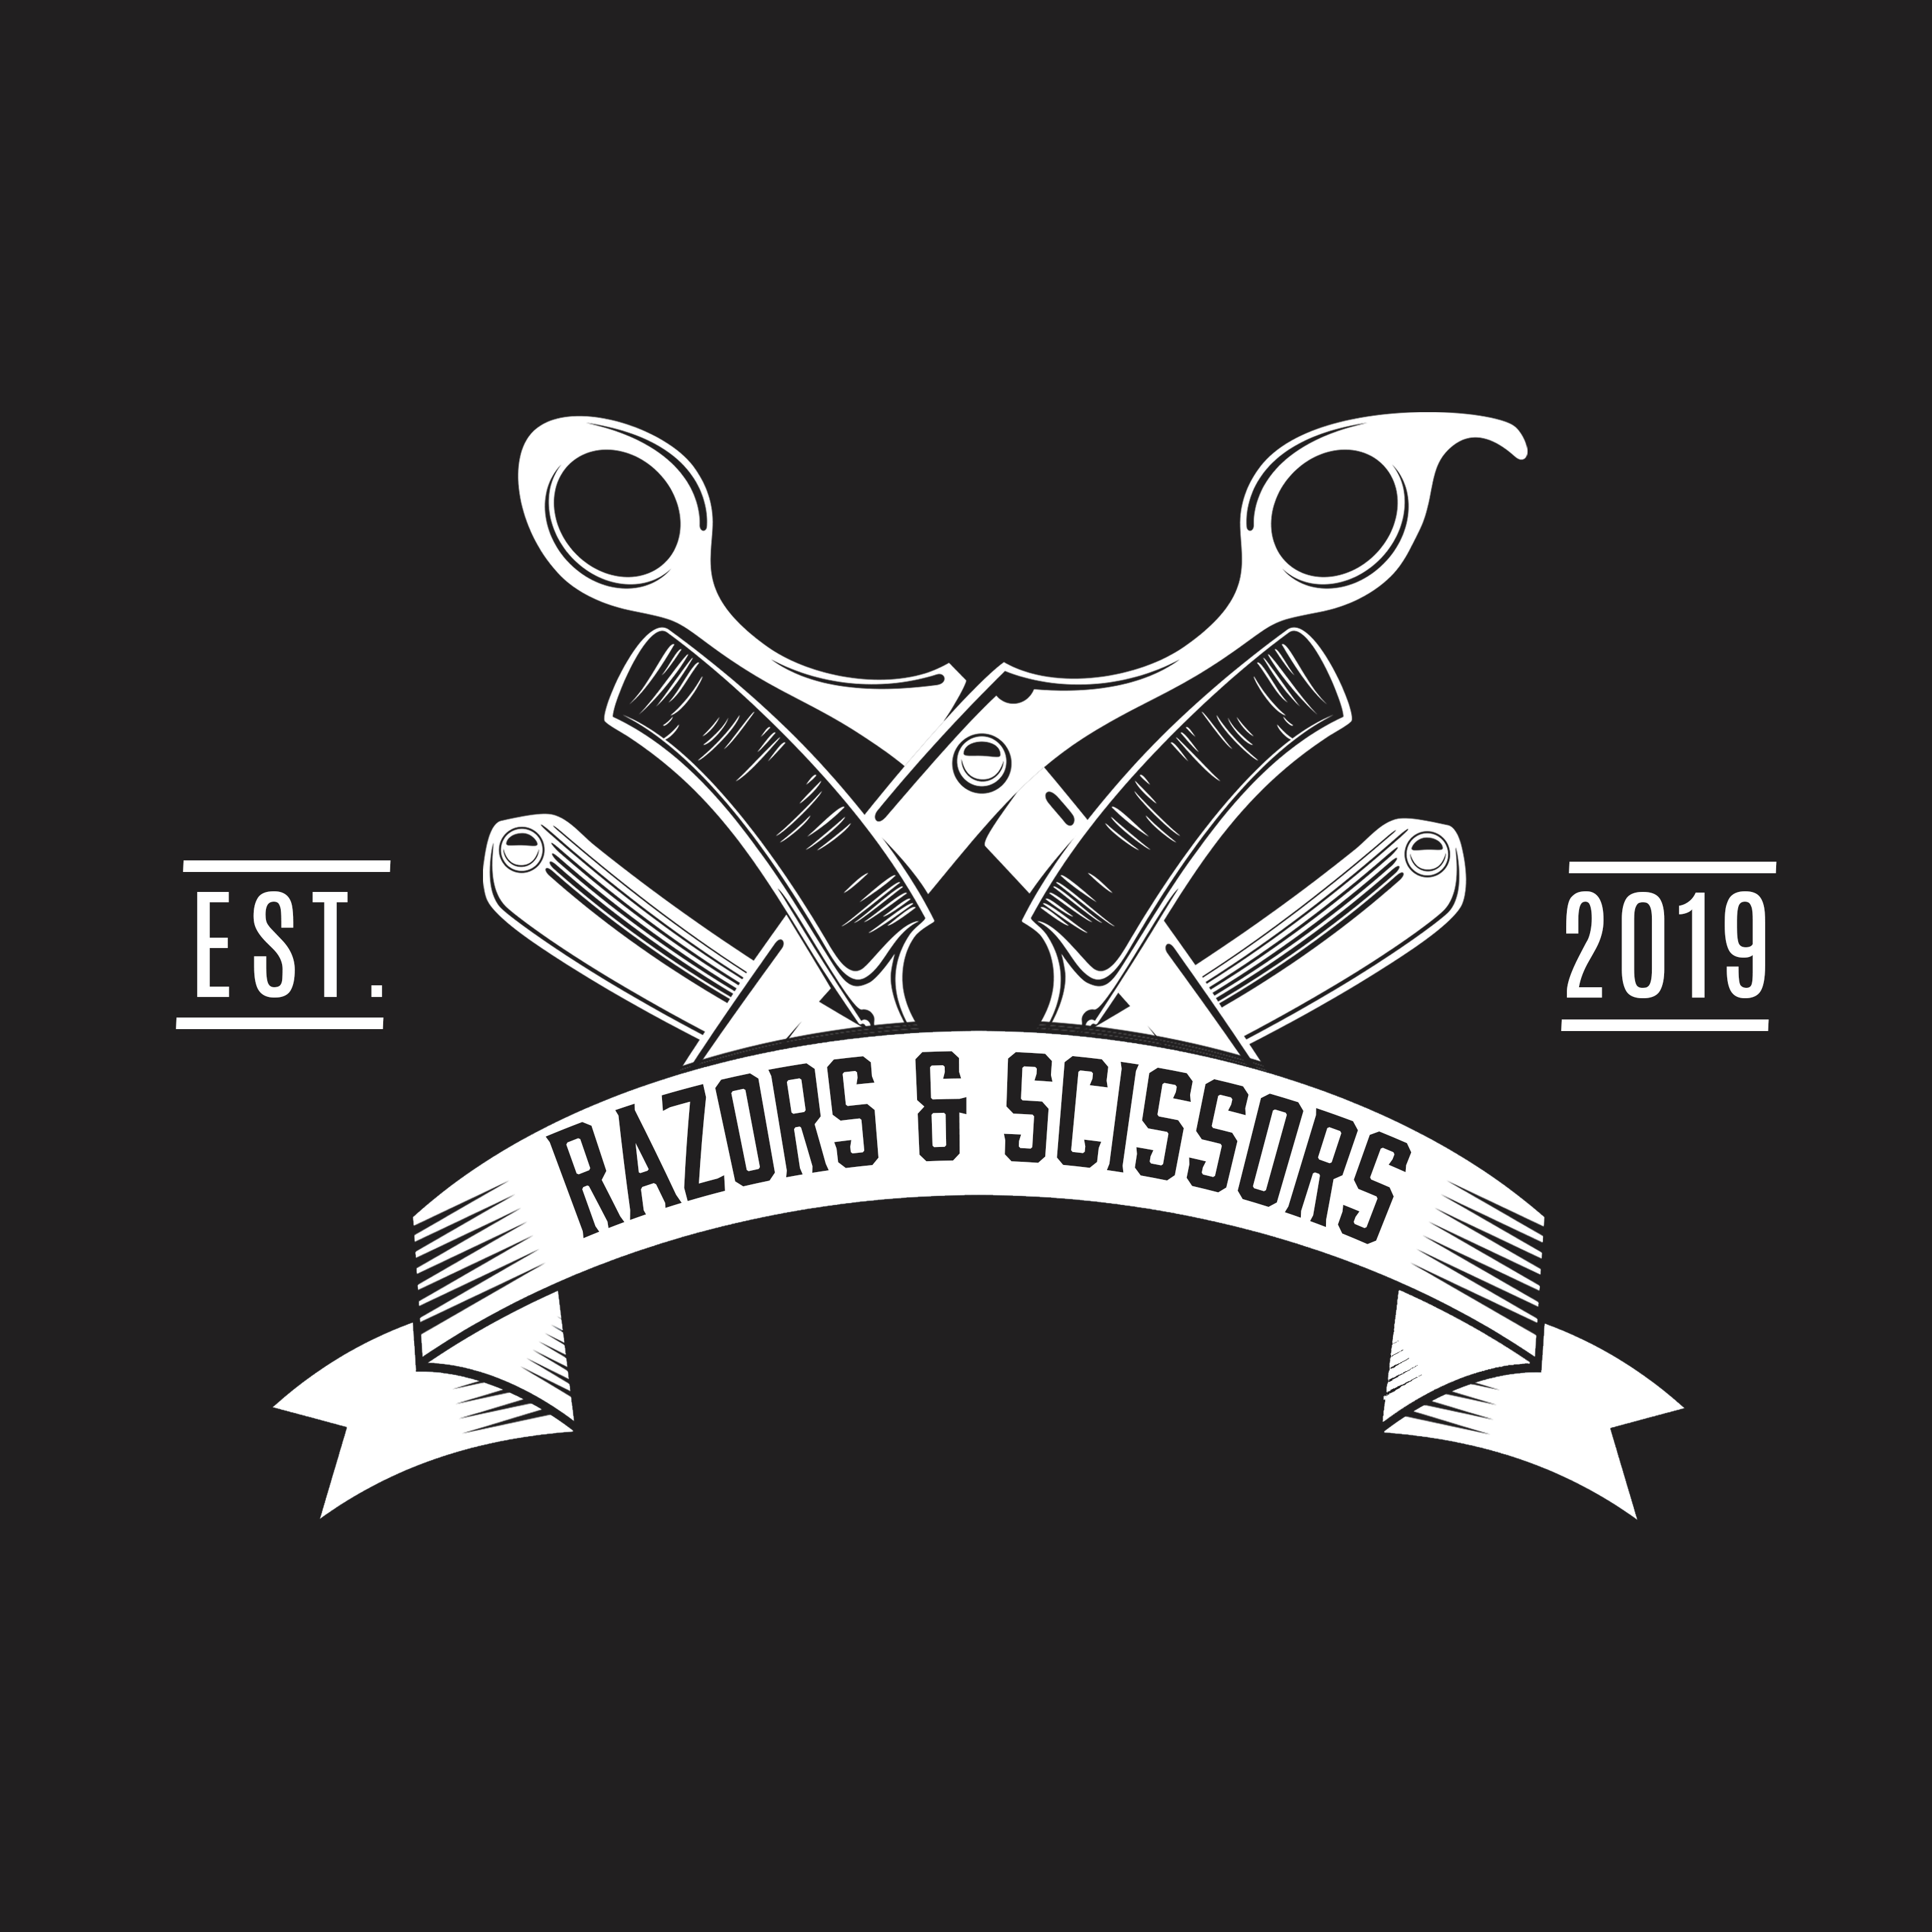 Razors & Scissors - Men's grooming lounge Logo